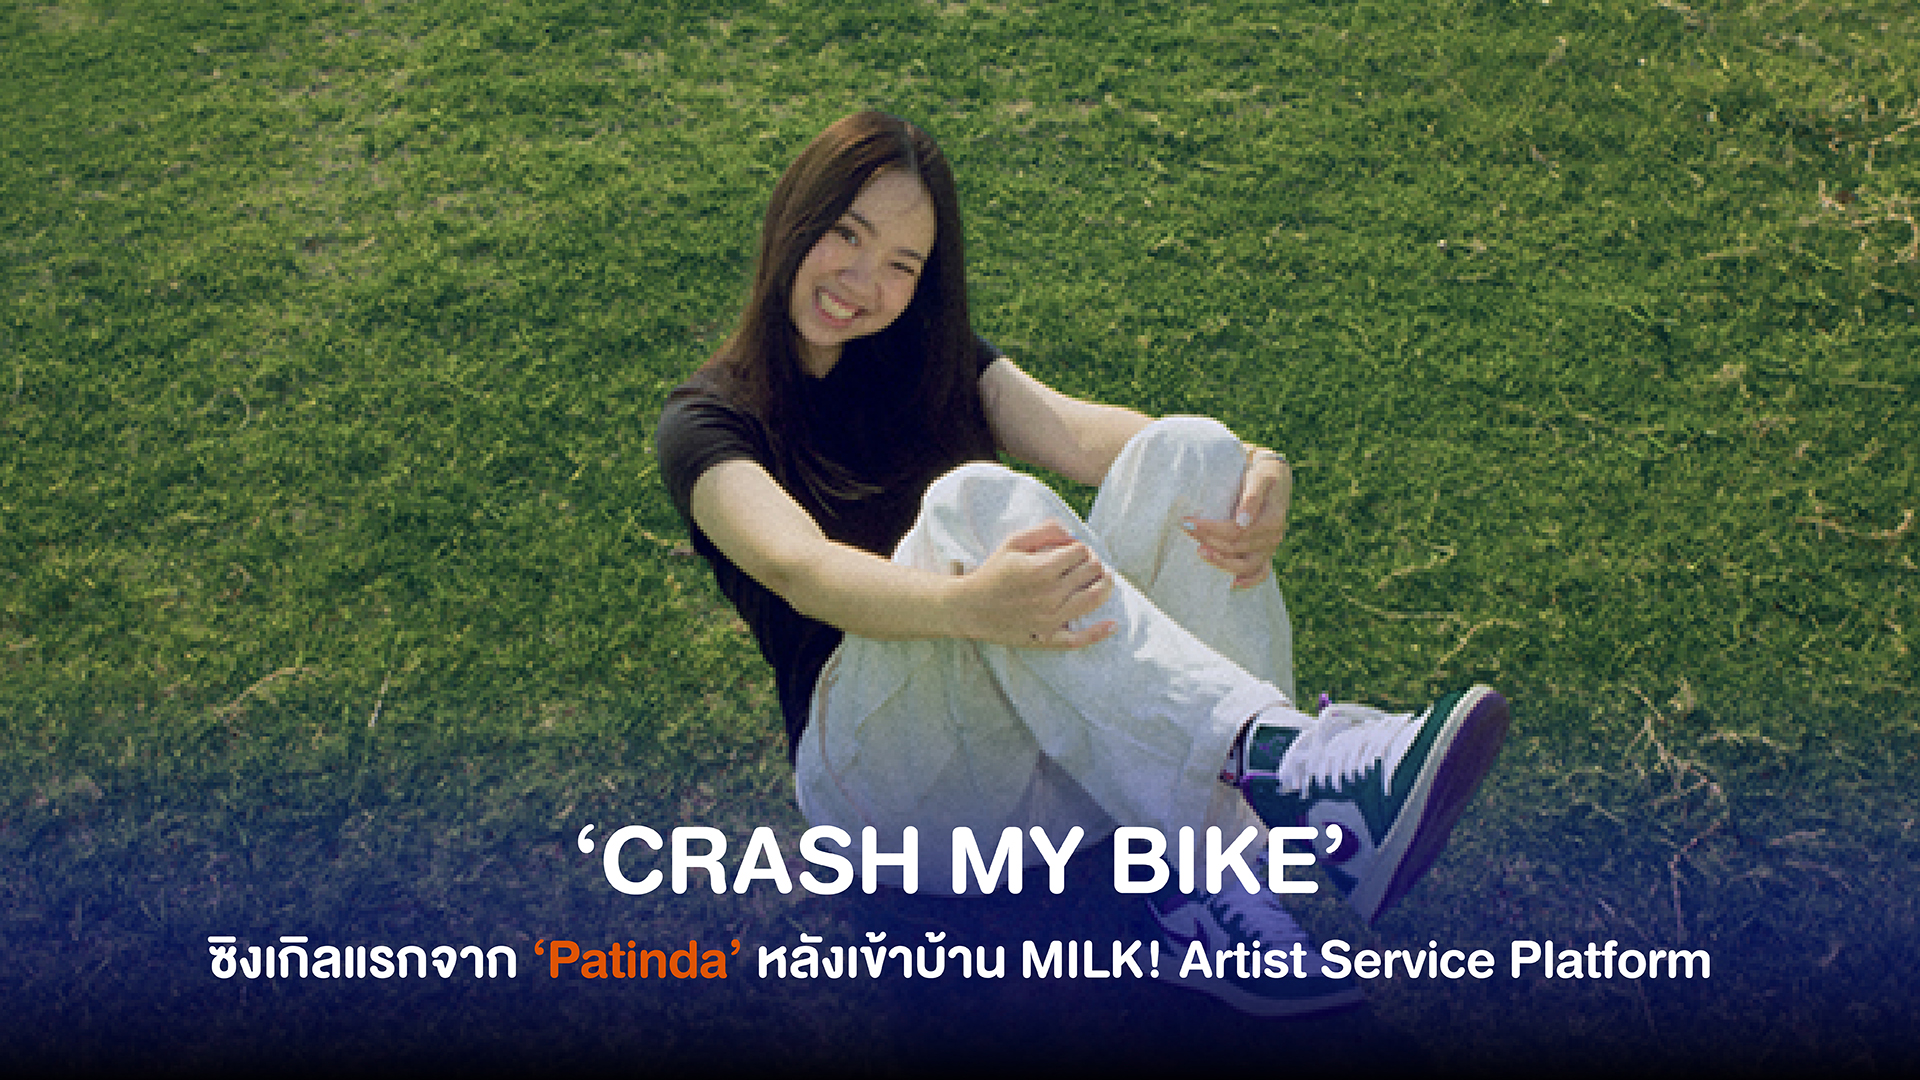 Patinda (พาทินดา) ปล่อยเพลงใหม่ชื่อว่า ‘CRASH MY BIKE’ ซิงเกิลแรกหลังเข้าบ้าน MILK! Artist Service Platform